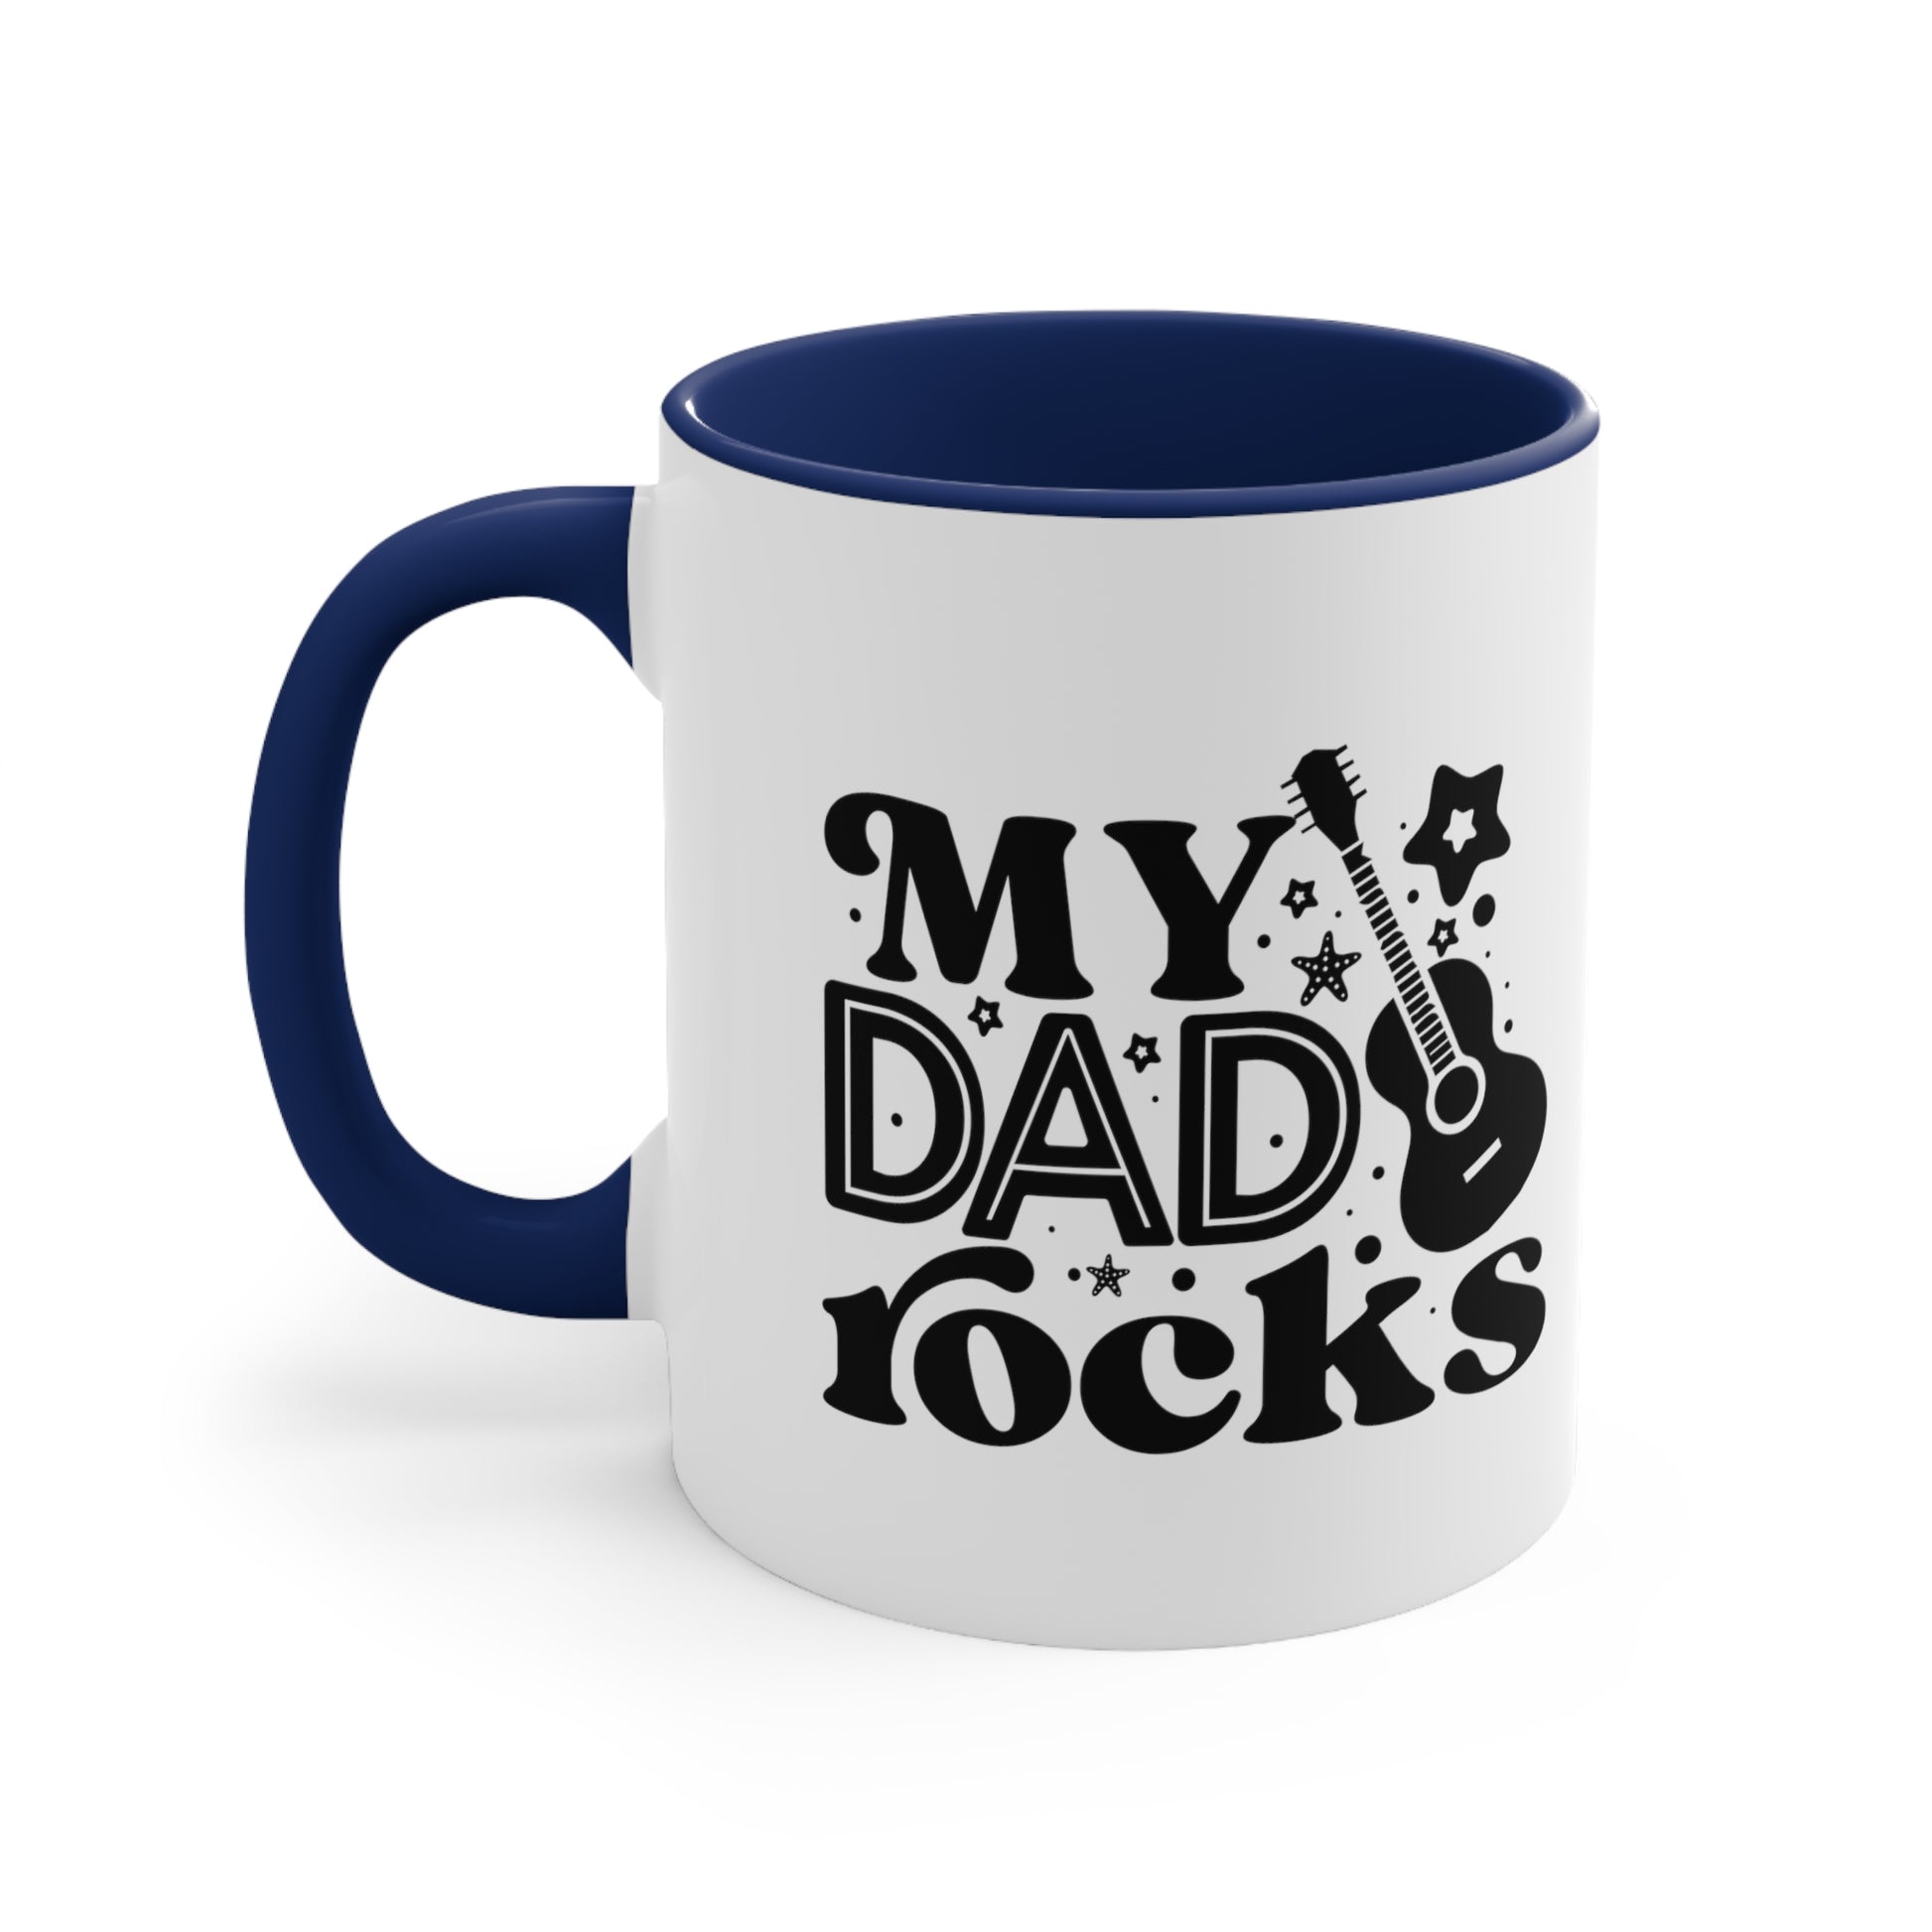 My Dad Rocks Mug